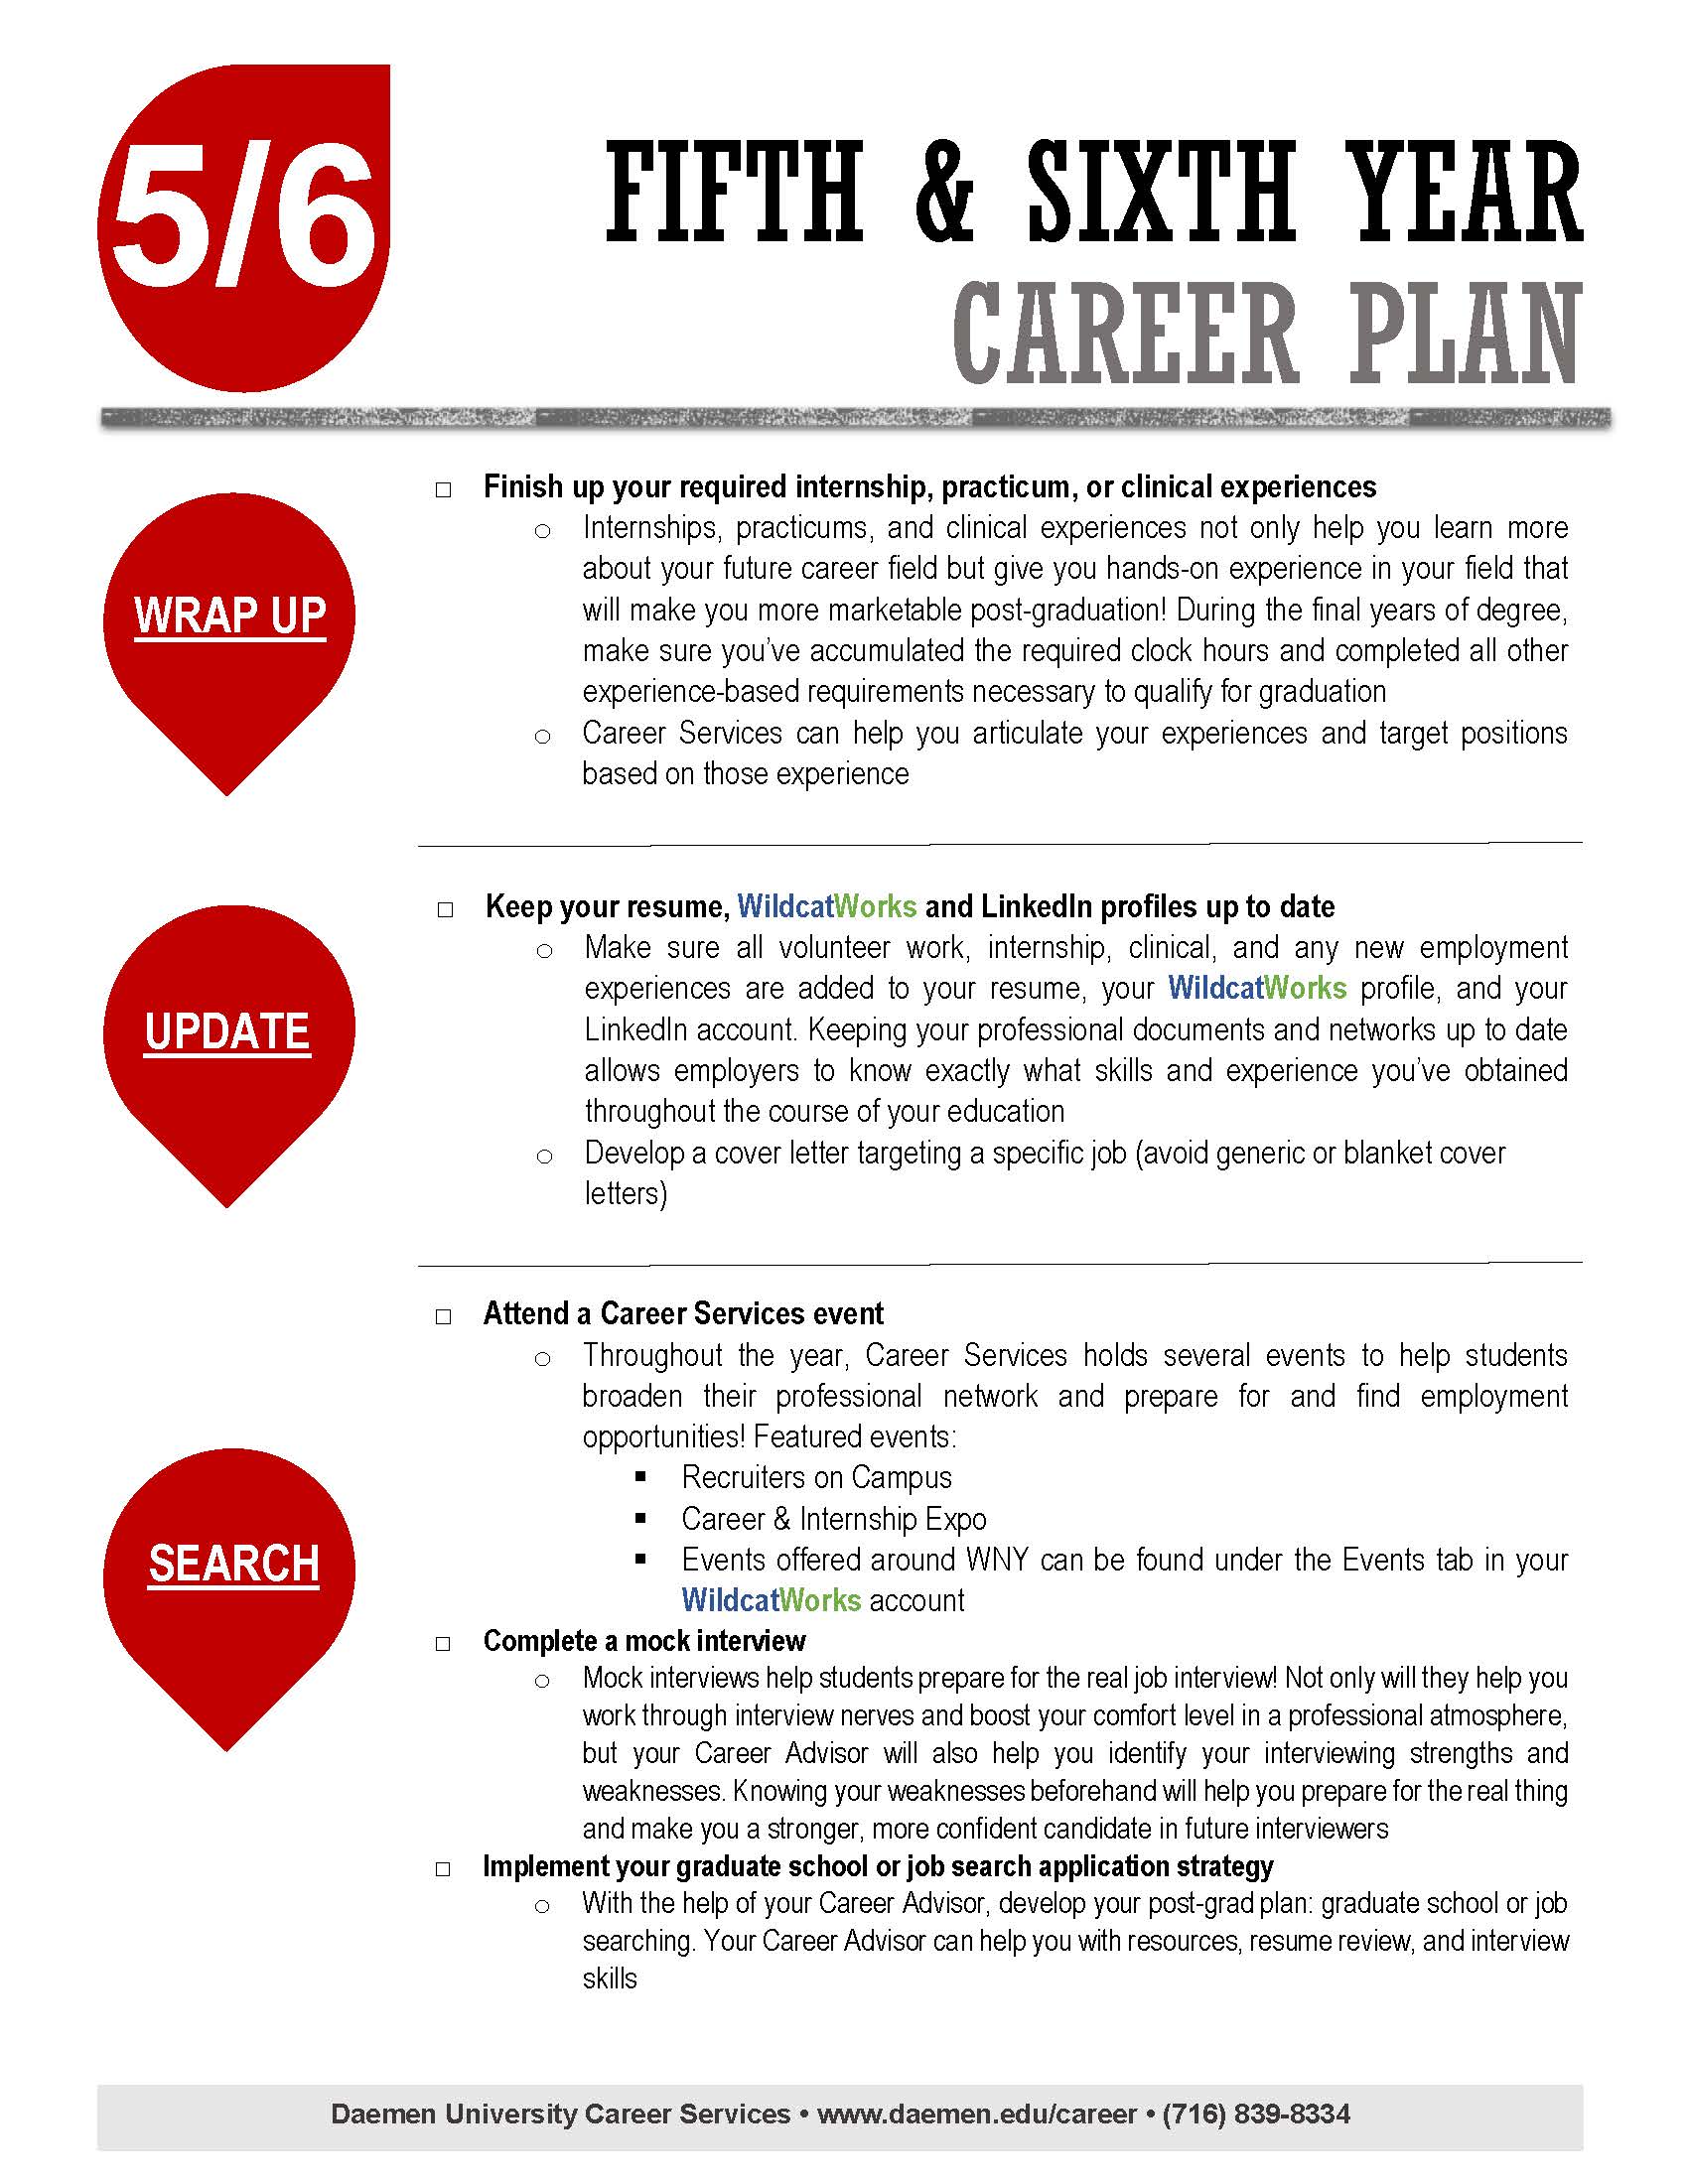 Fifth/Sixth Year Career Plan